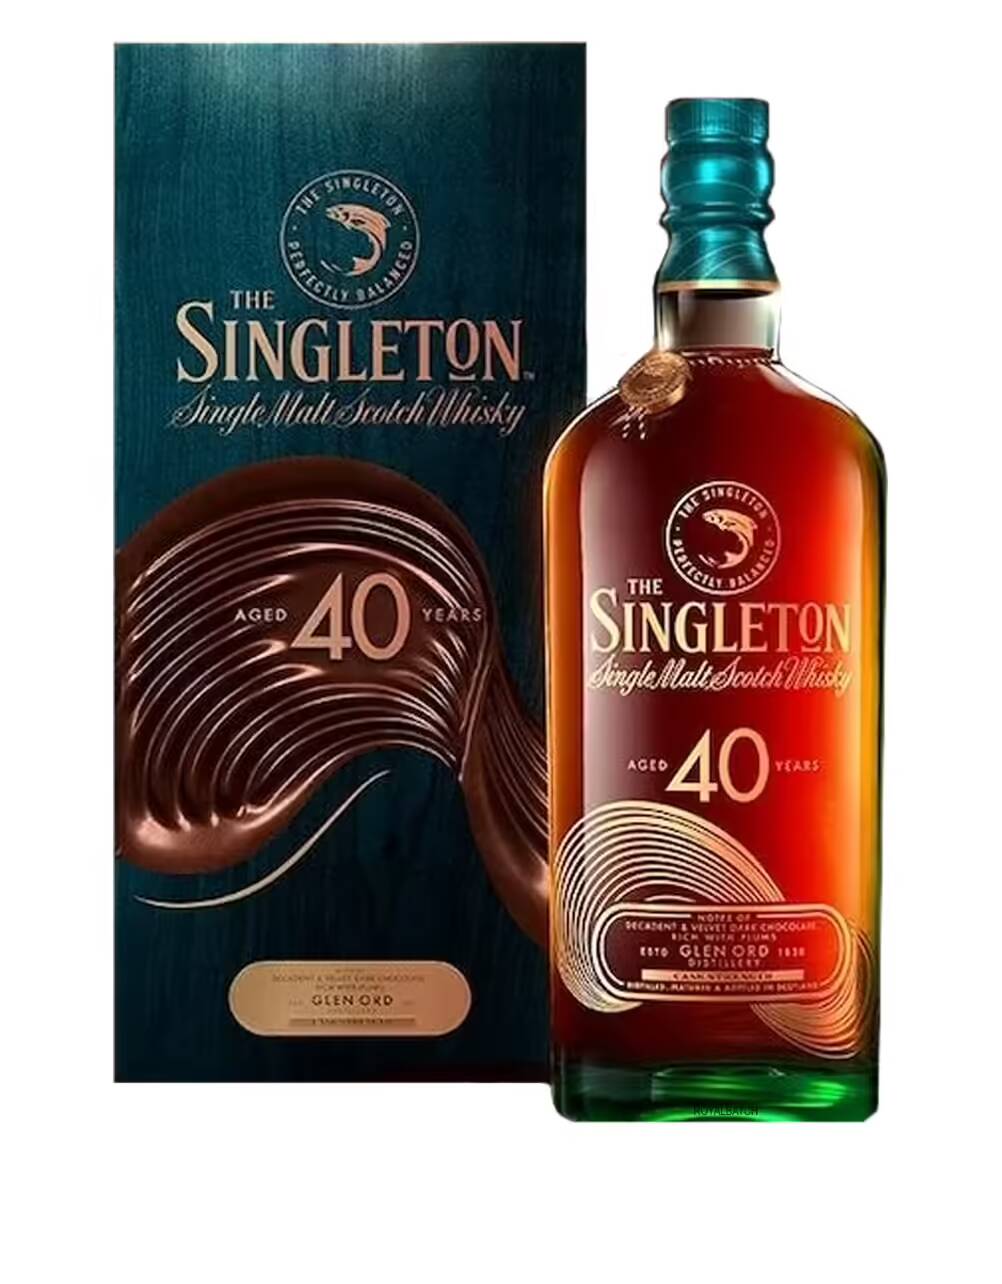 The Singleton Glen Ord 40 Year Old Single Malt Scotch Whisky